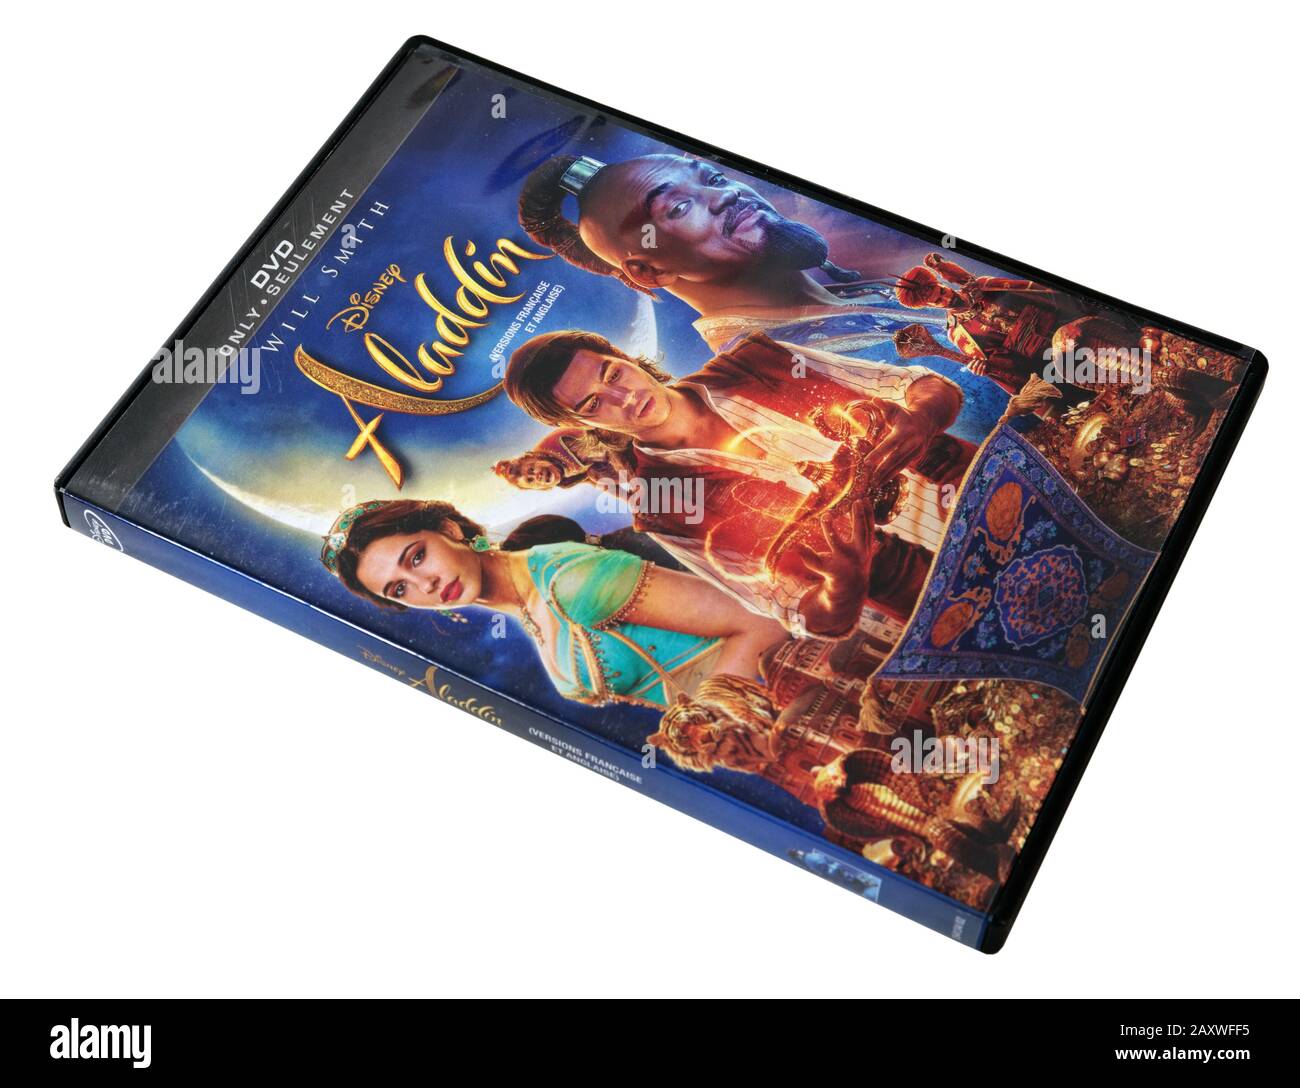 Aladdin film on DVD Stock Photo - Alamy